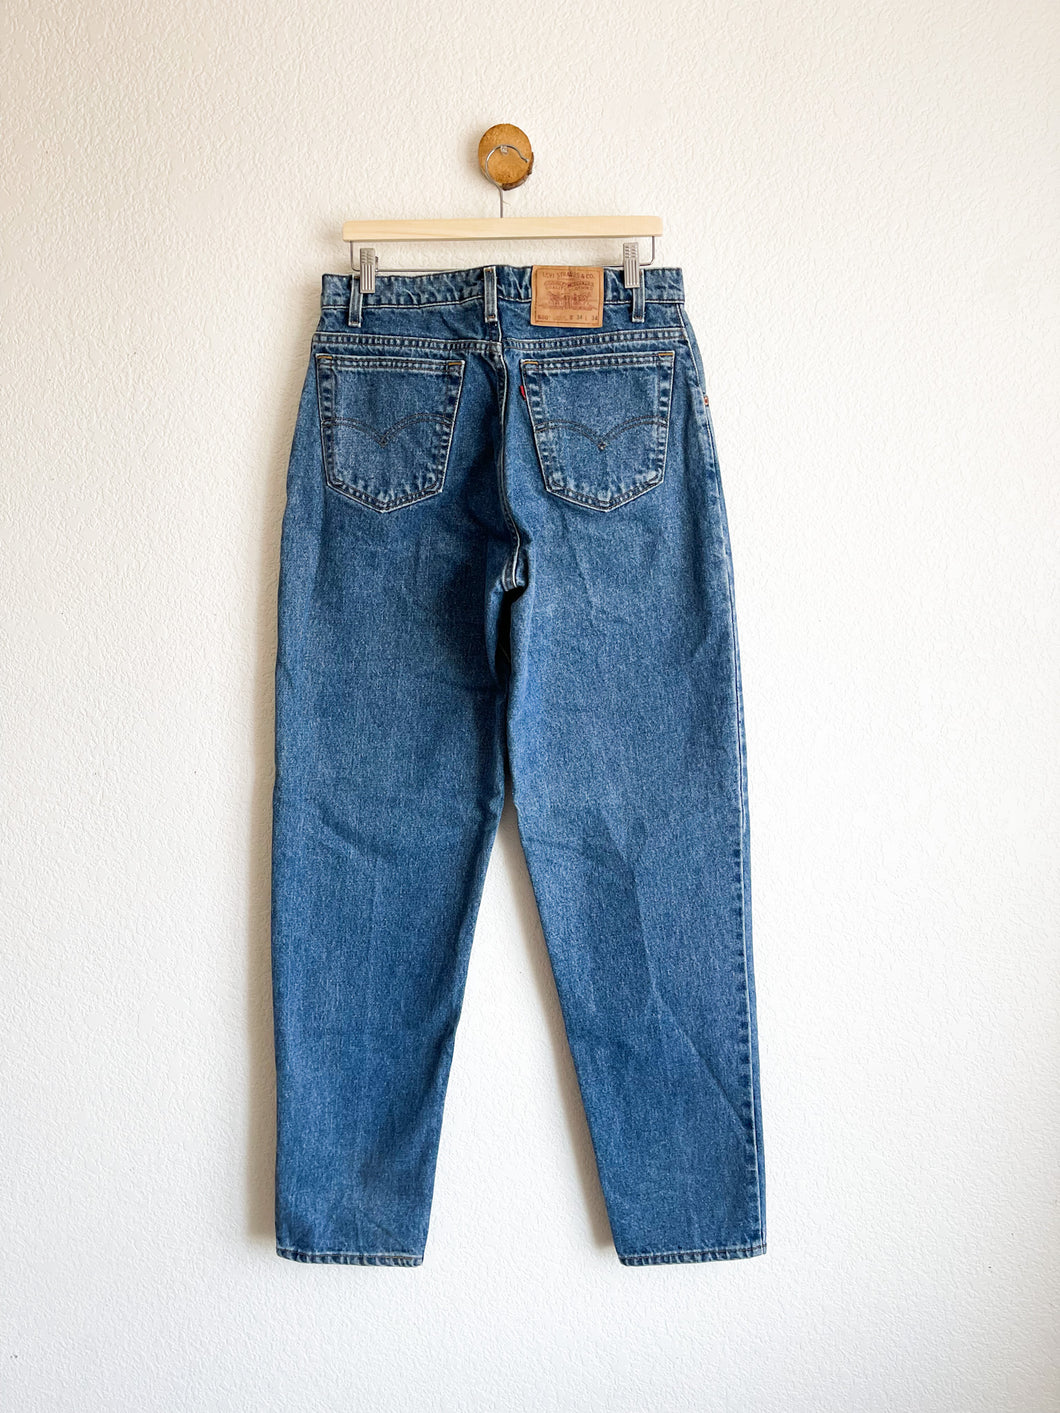 VINTAGE Levi's 560 Jeans - Select Your Size & Length